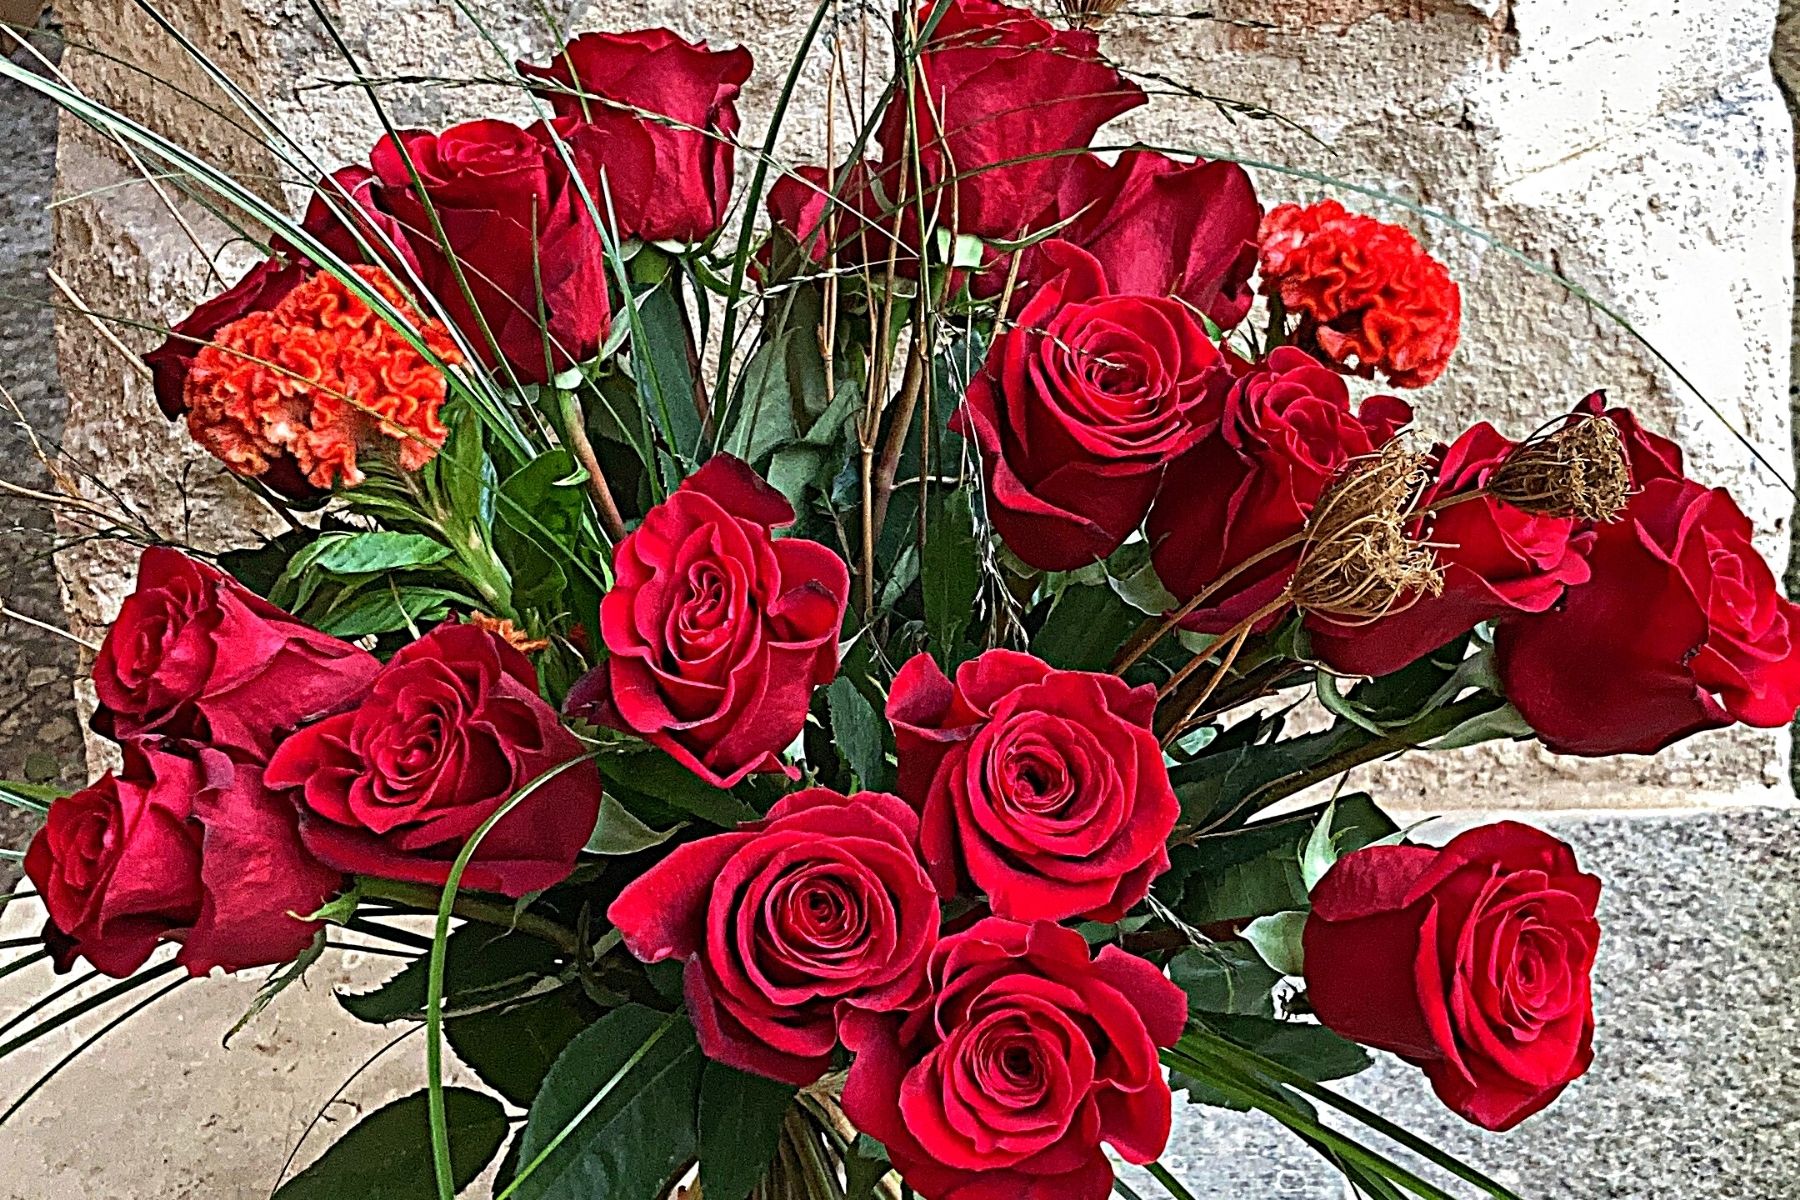 The meaning of red roses - Freedom roses Naranjo Roses on Thursd